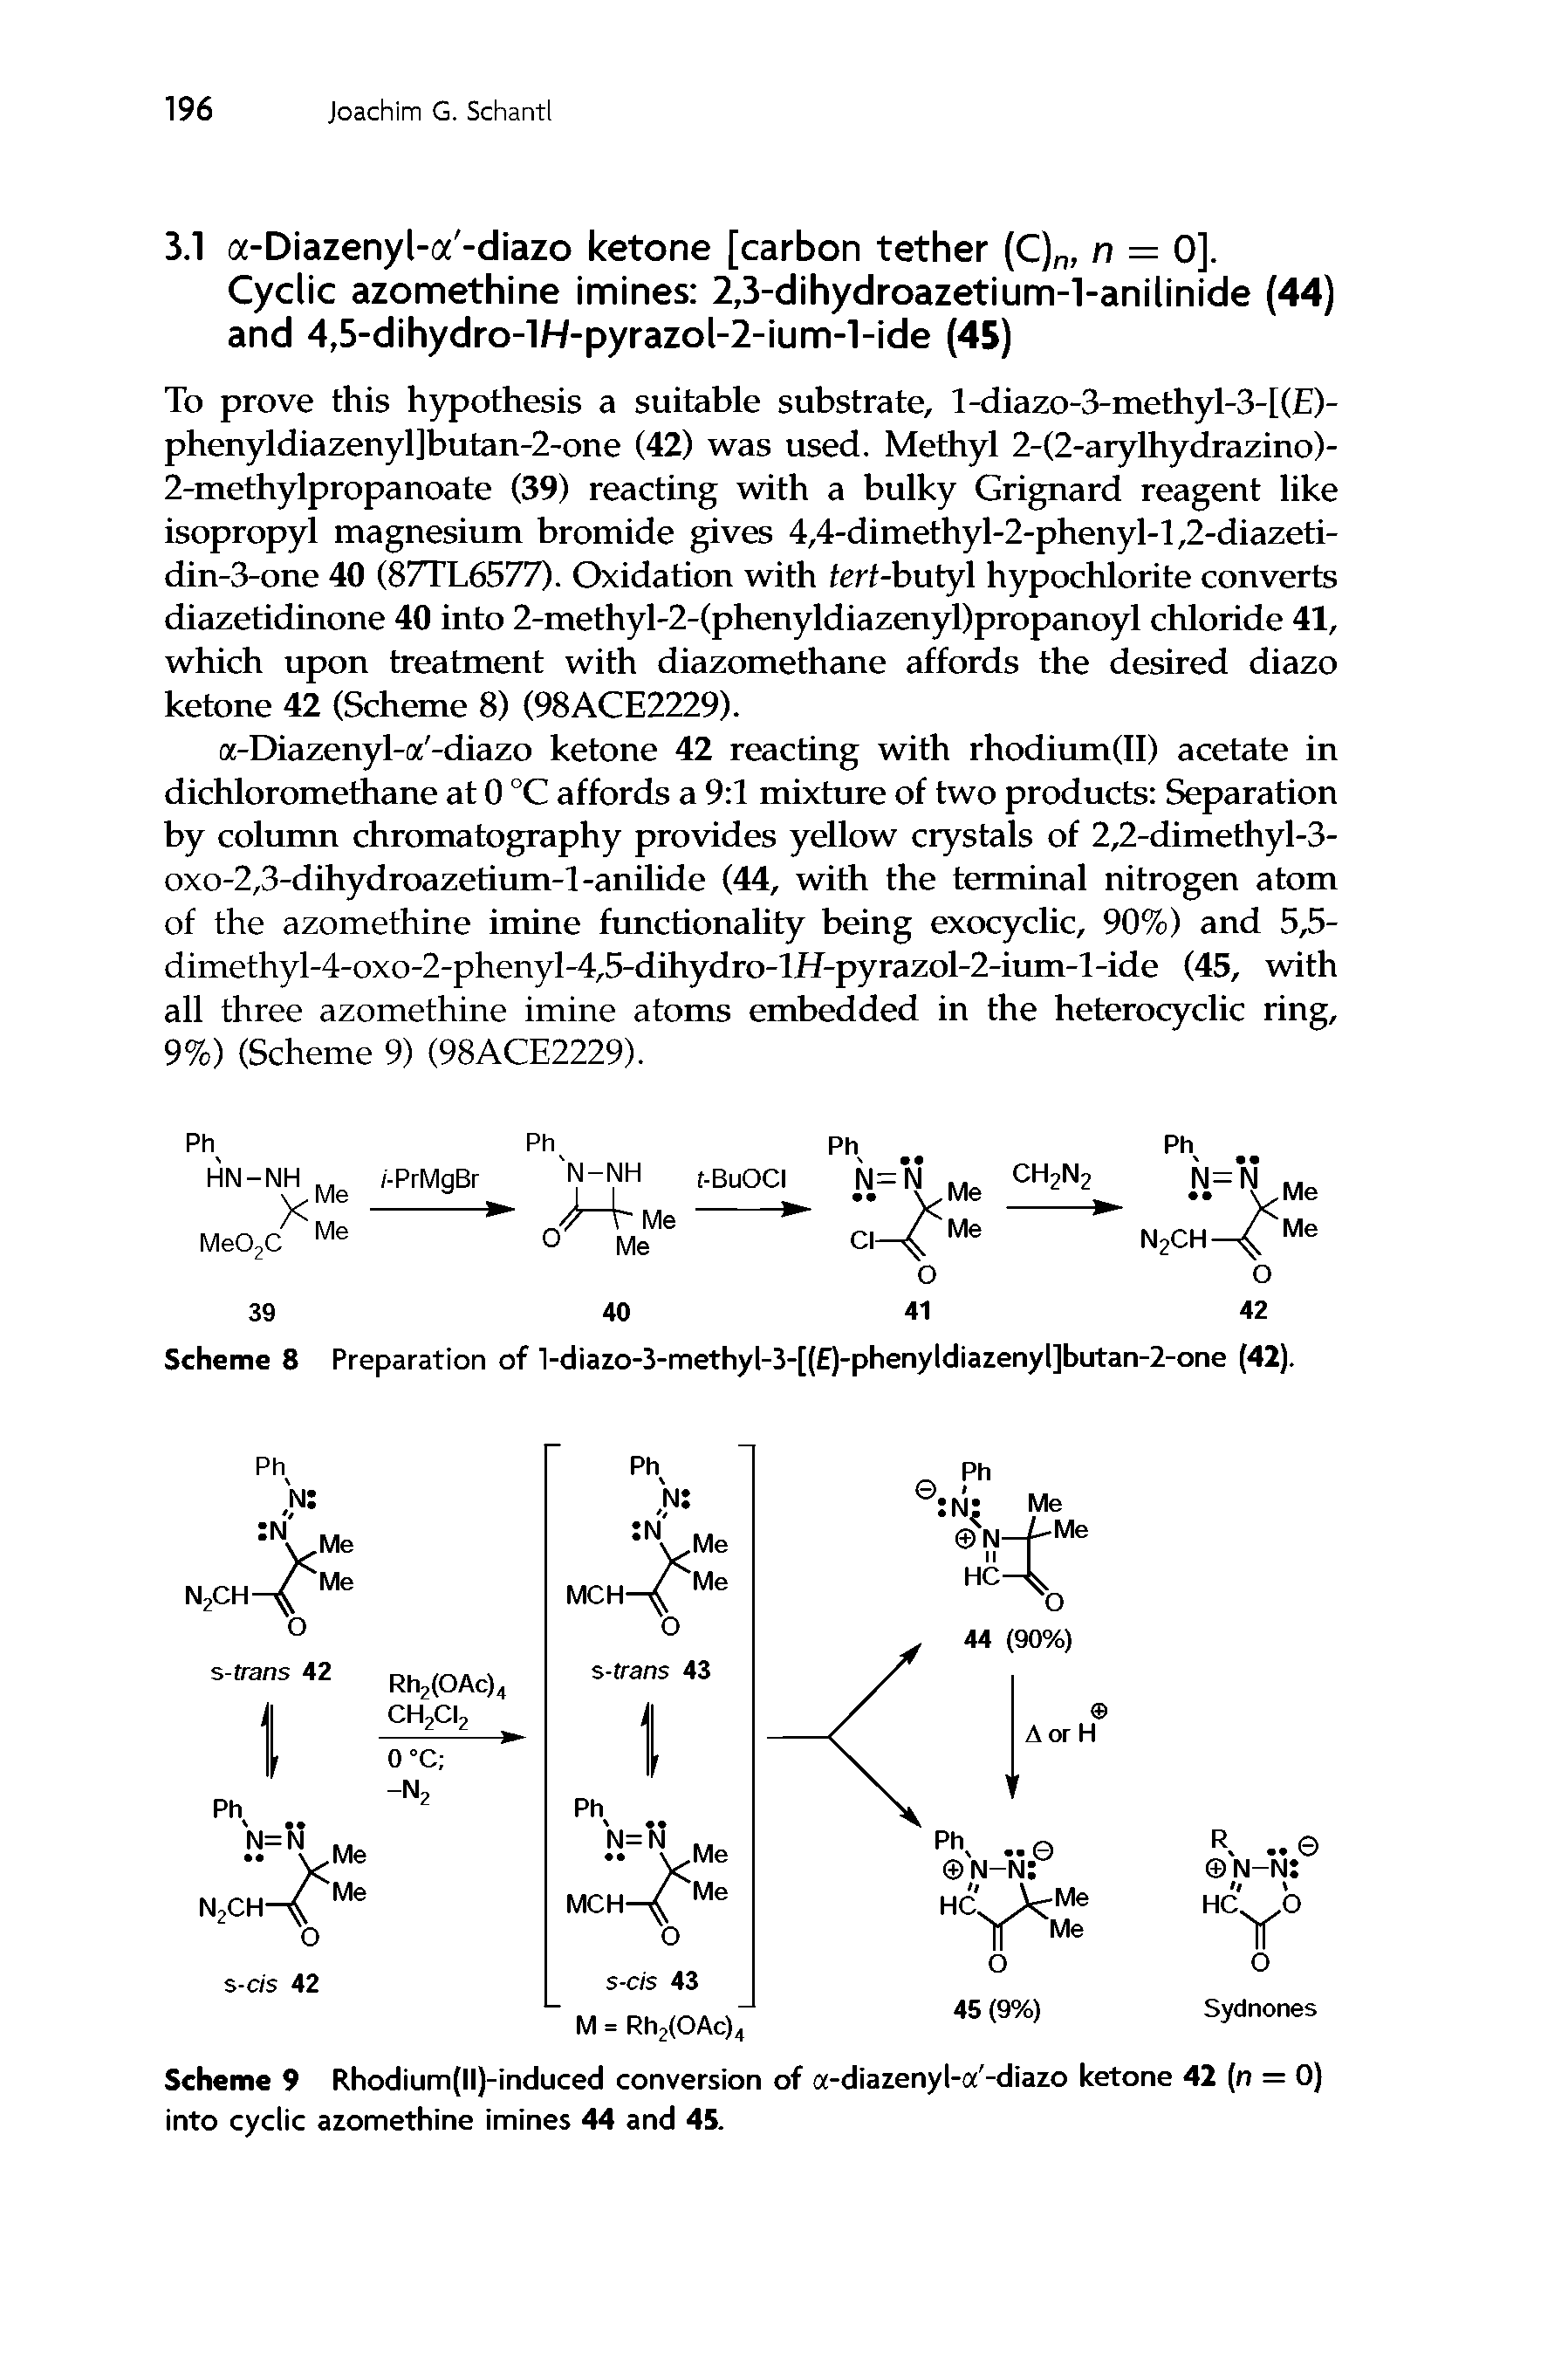 Scheme 9 Rhodium(ll)-induced conversion of a-diazenyl-a -diazo ketone 42 [n = 0) into cyclic azomethine imines 44 and 45.